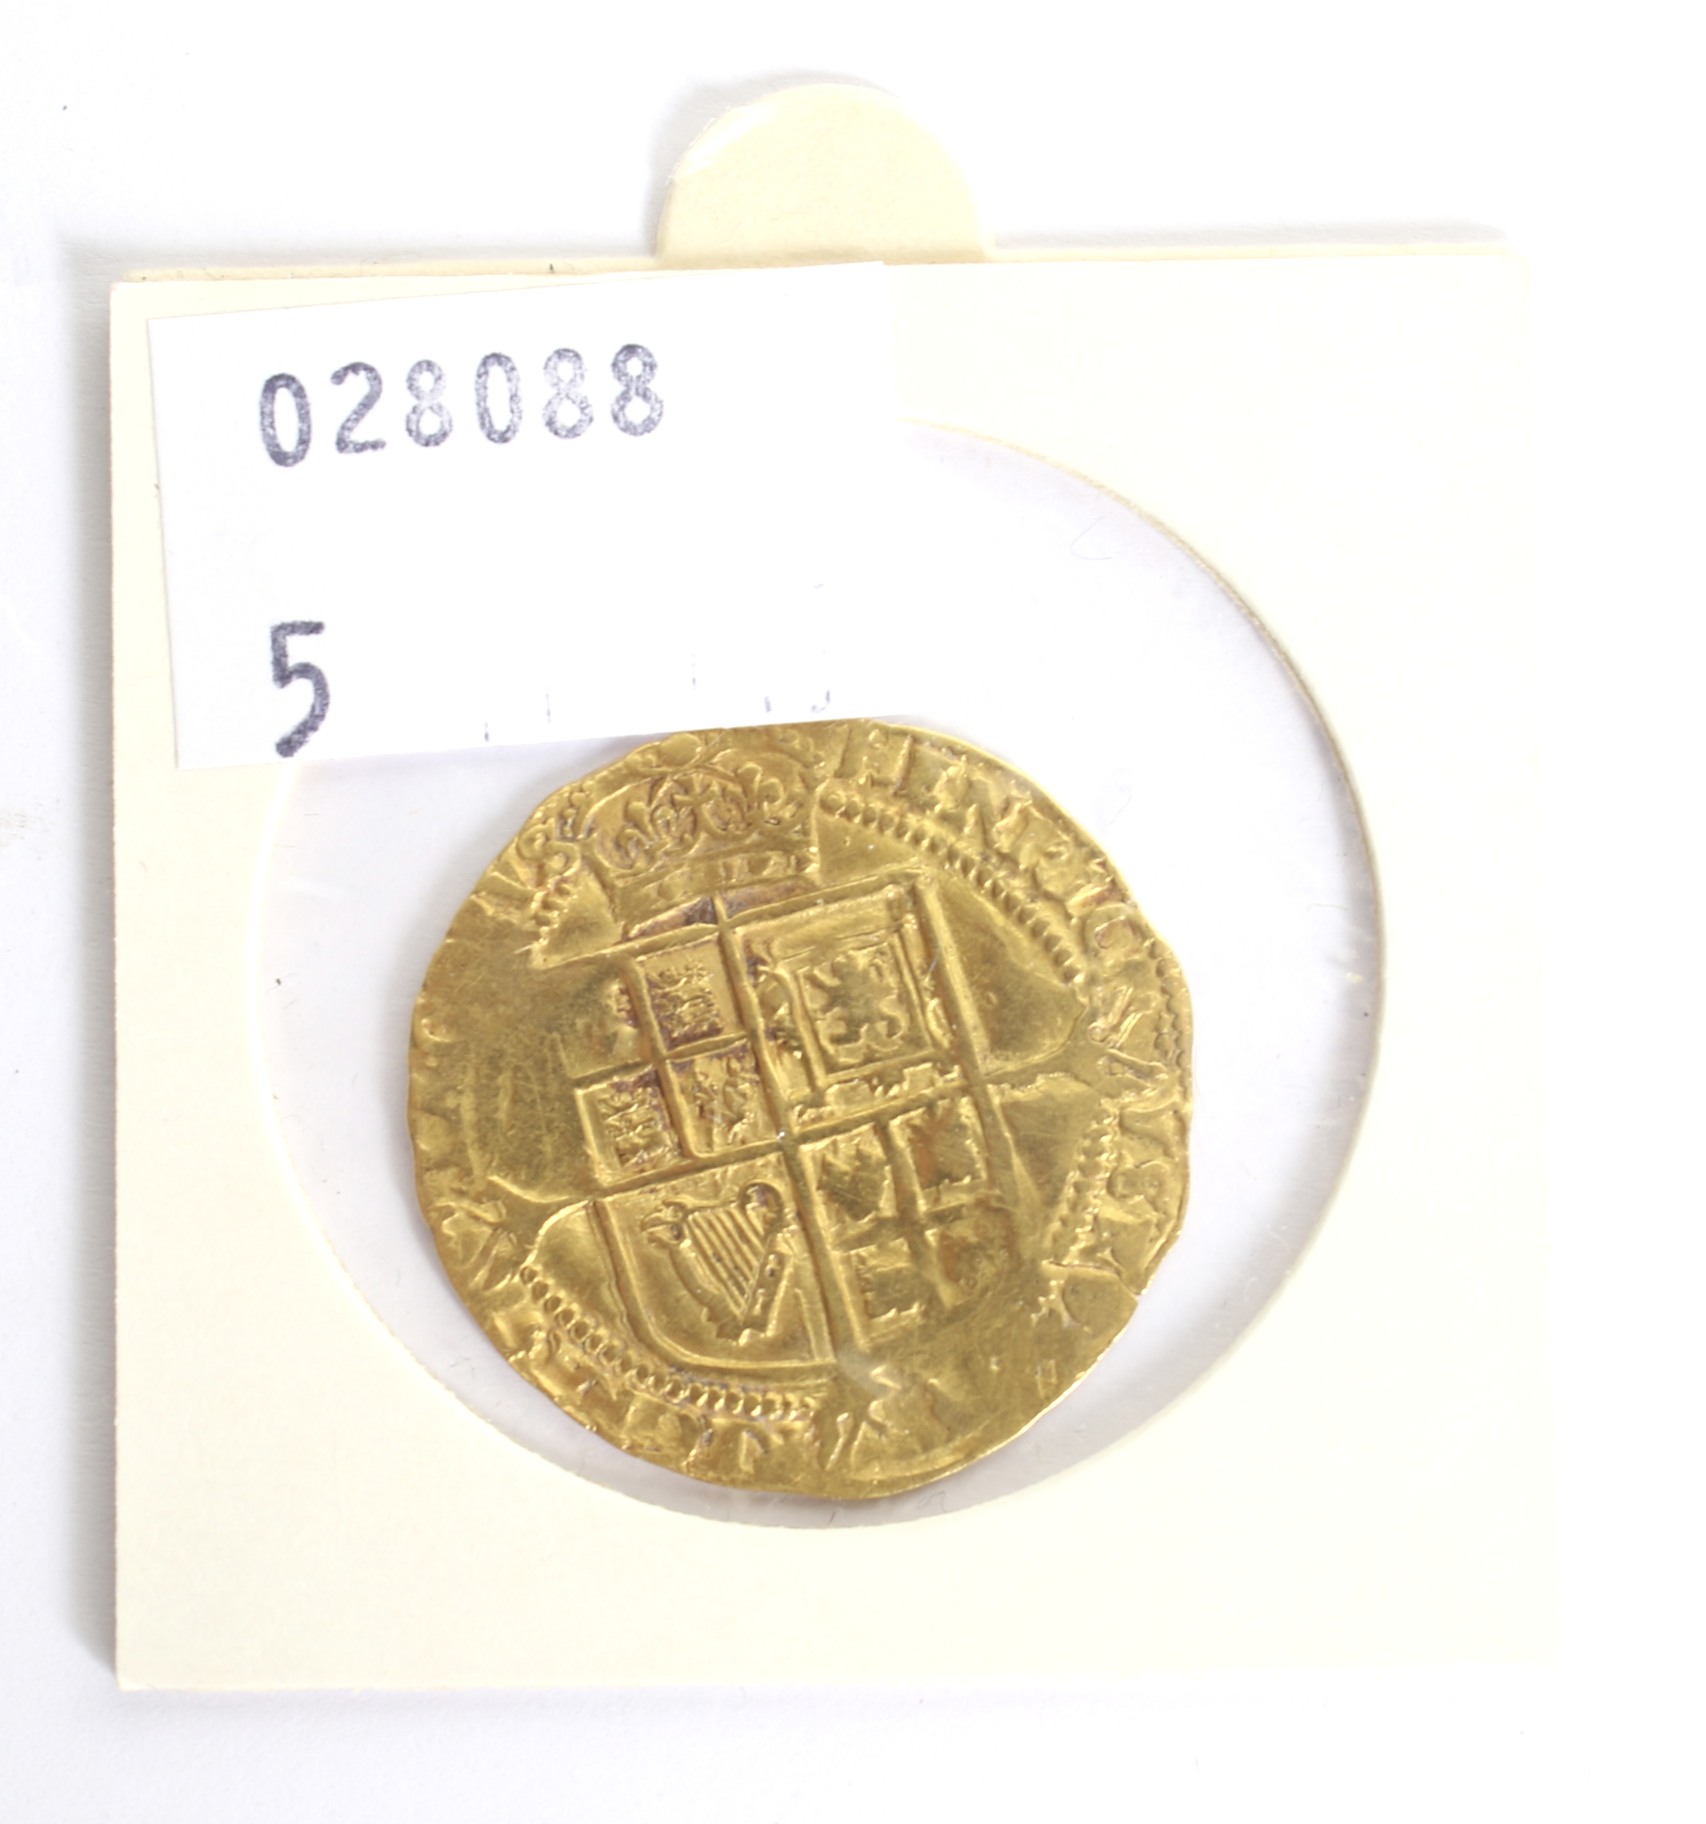 1603-1625 James I gold half laurel coin in VF condition. 27.5 mm diameter (mm.rose) - Image 2 of 2